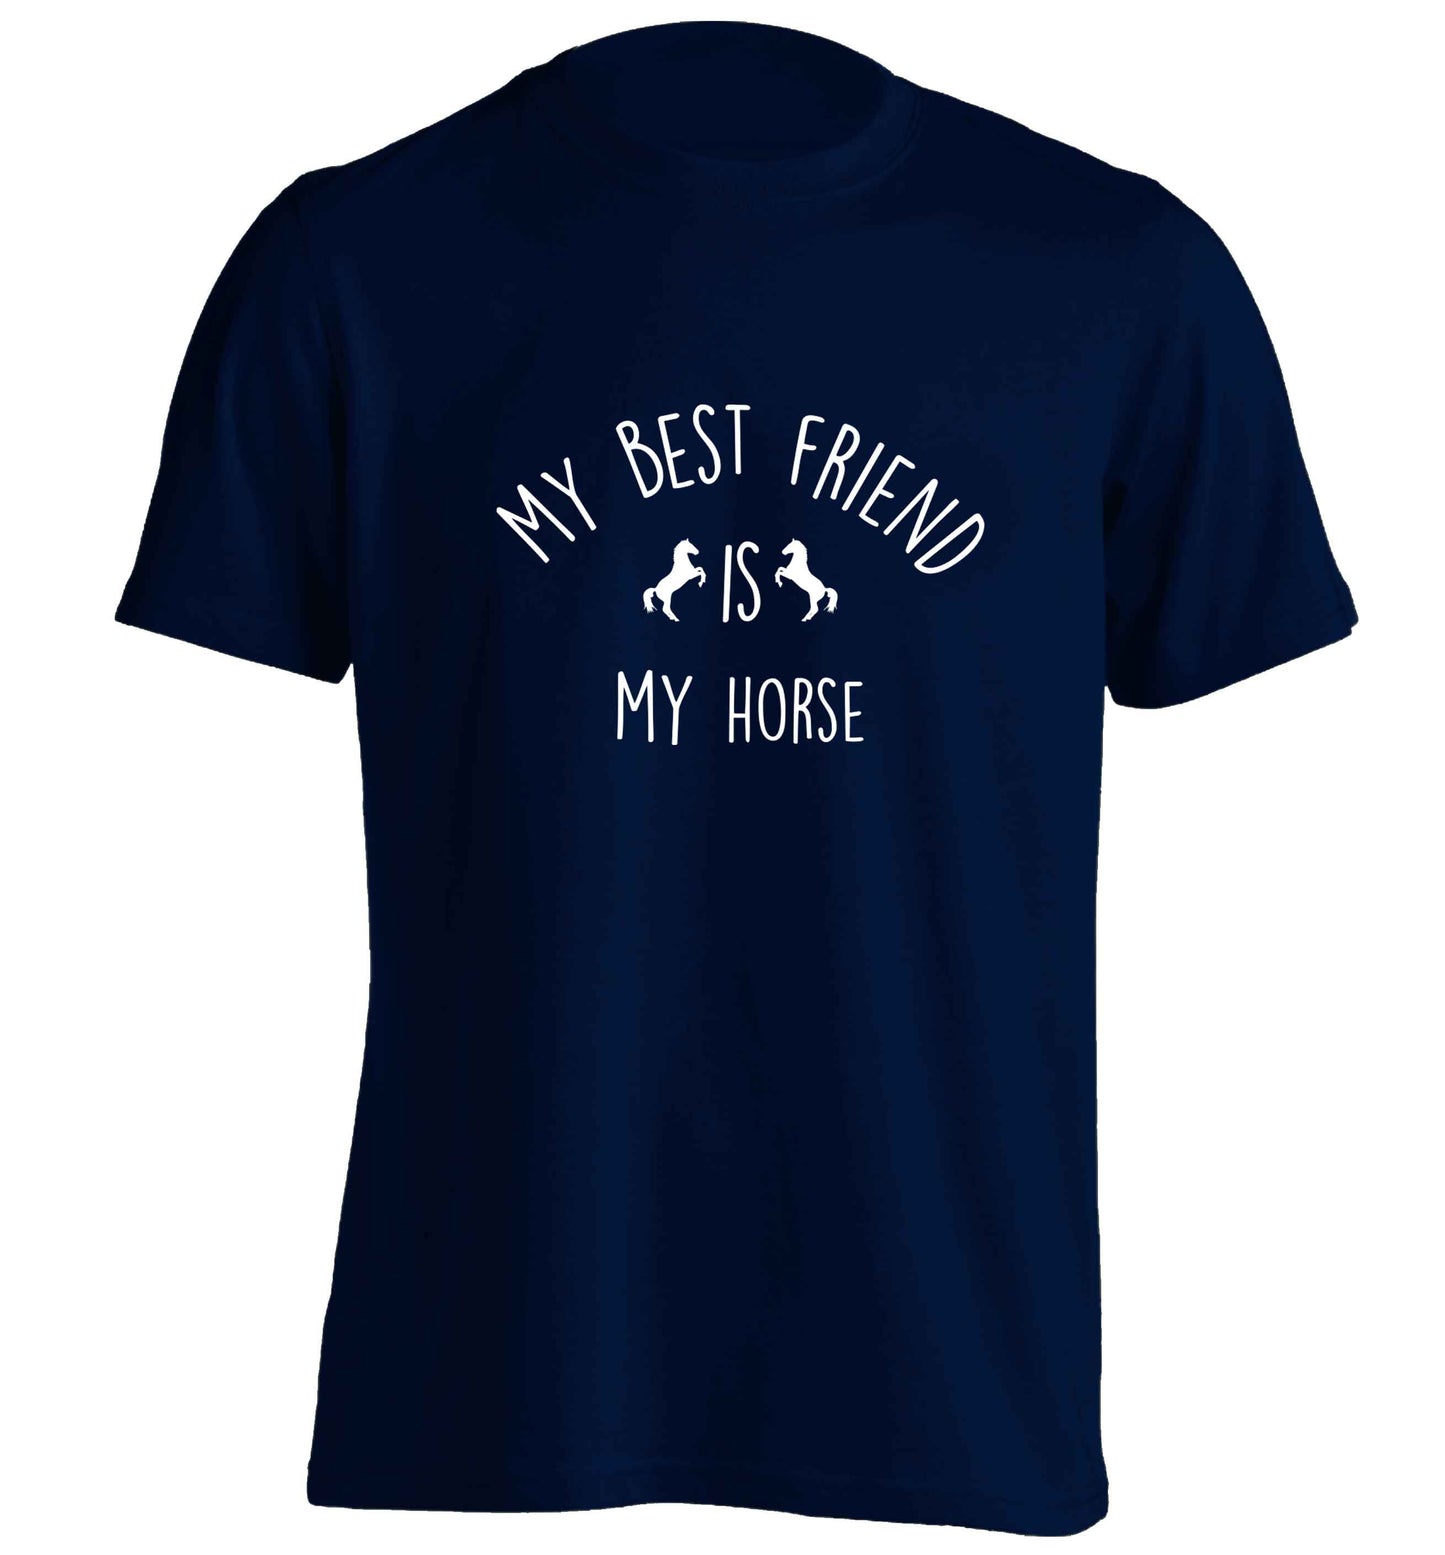 My best friend is my horse adults unisex navy Tshirt 2XL